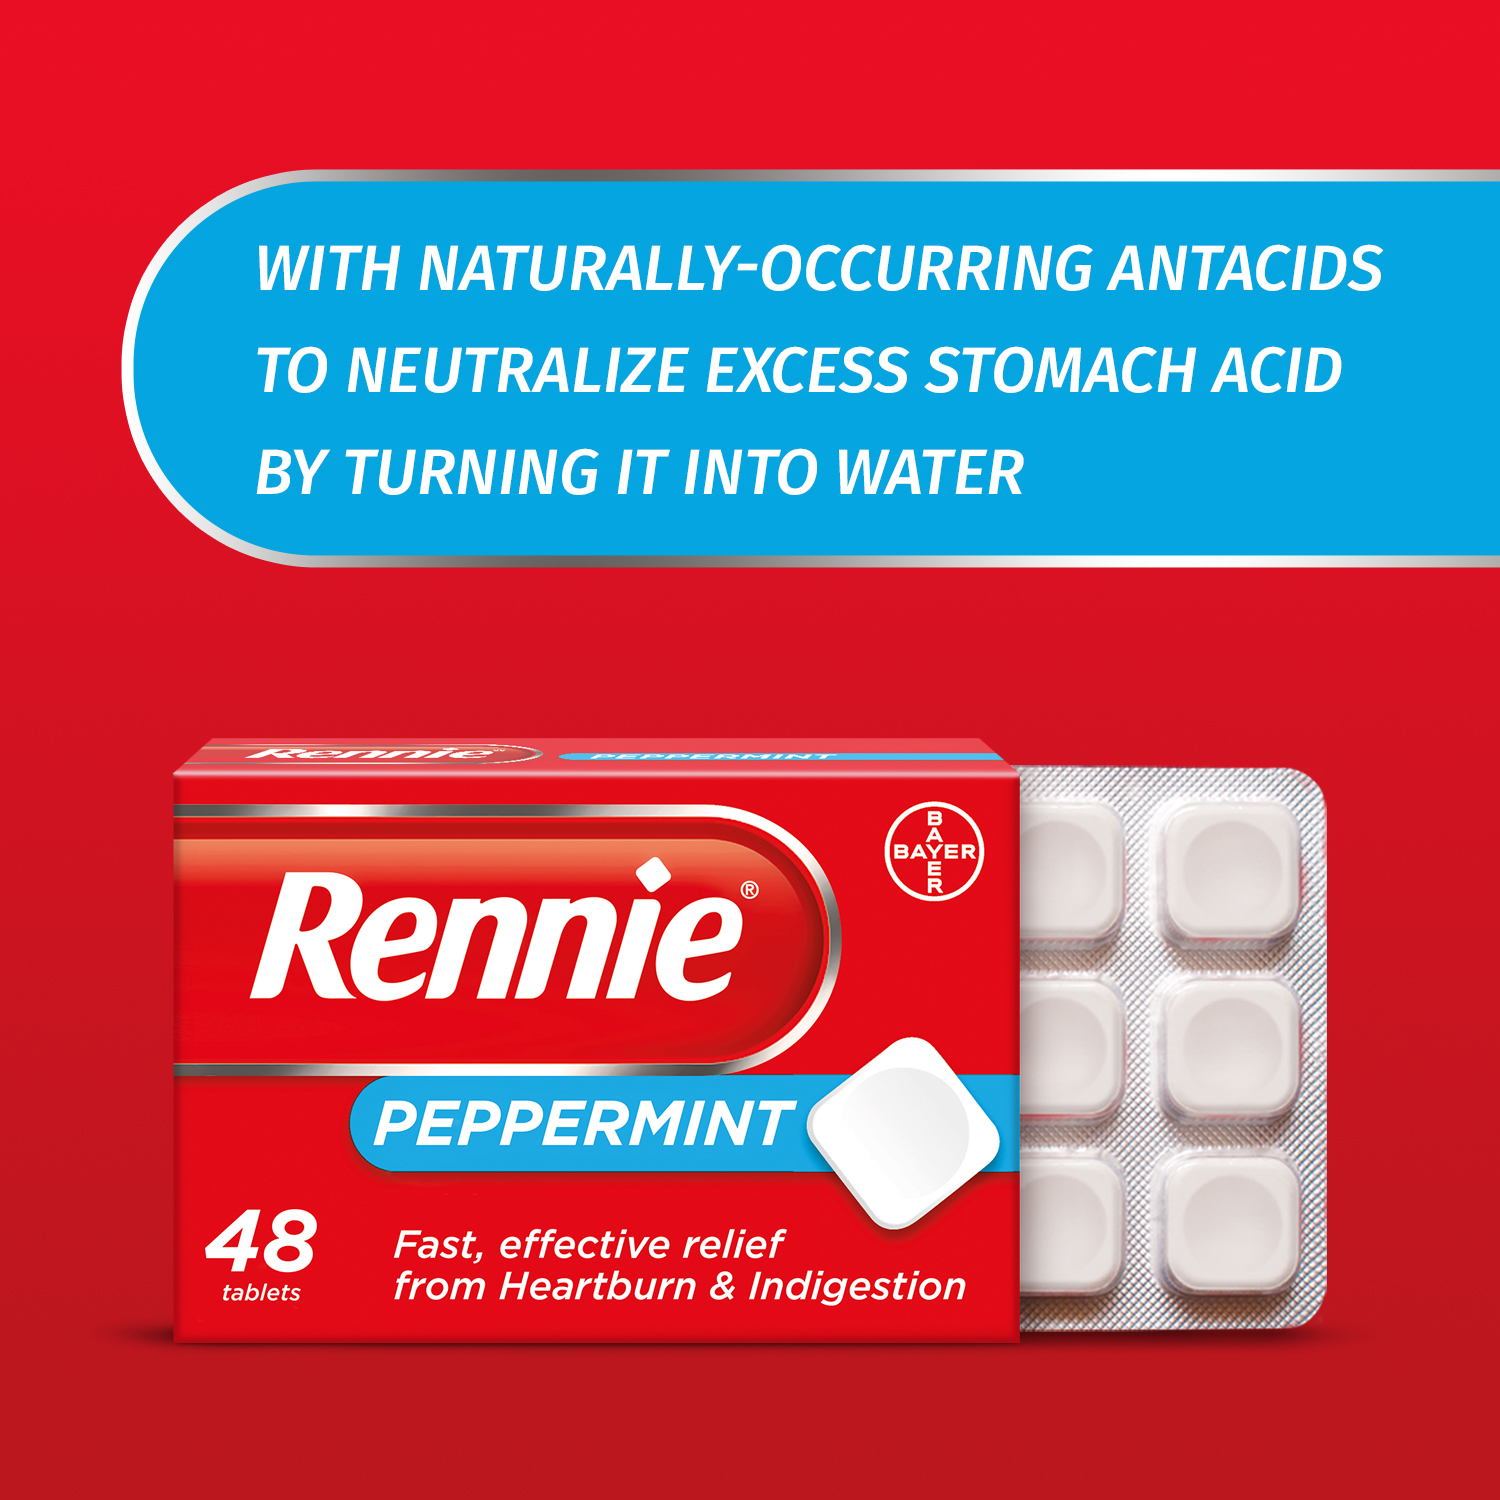 5.Bayer_eCommerce_Rennie_Peppermint_Ingredients